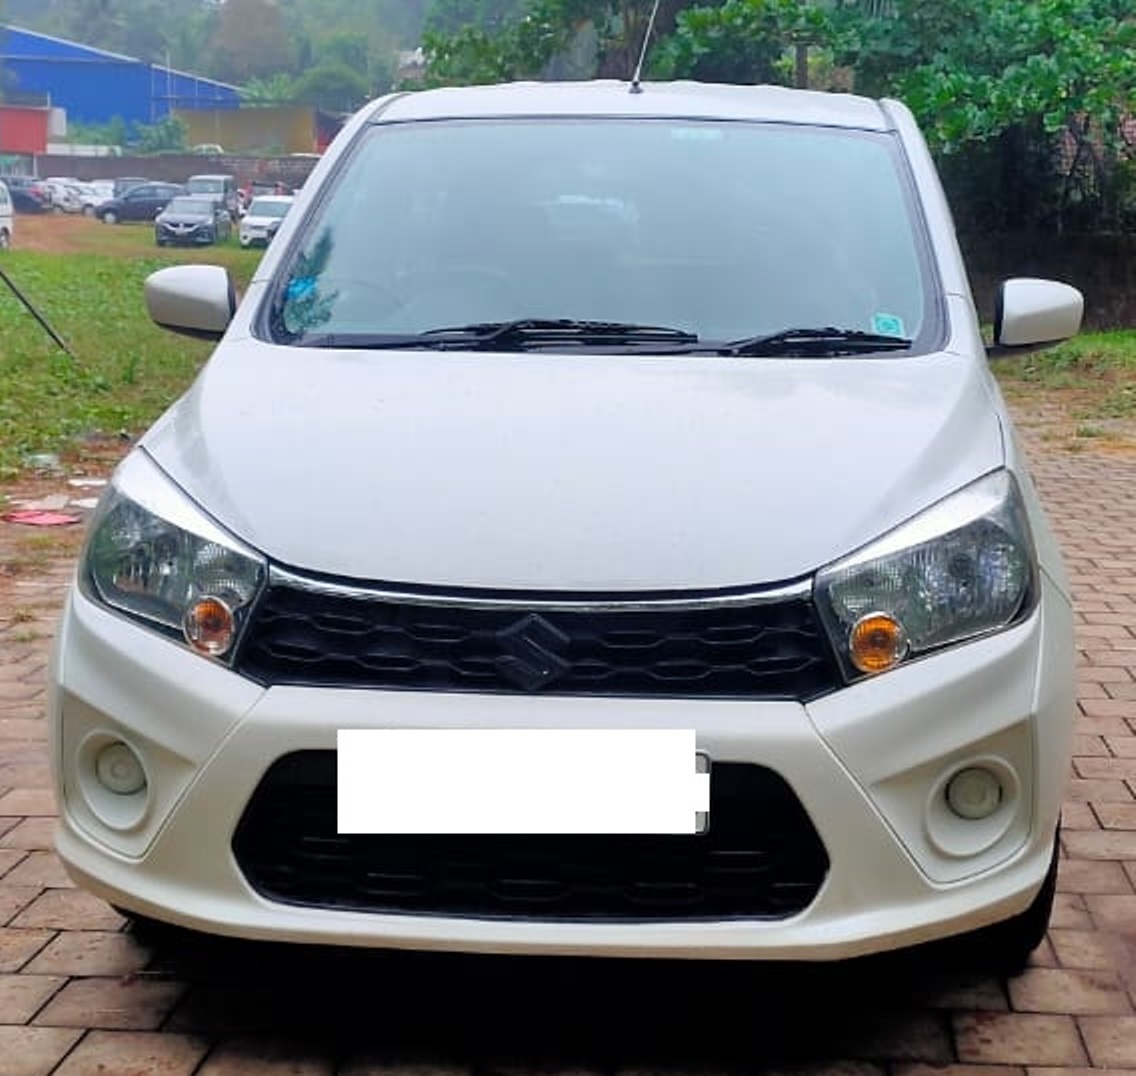 MARUTI CELERIO 2019 Second-hand Car for Sale in Kannur